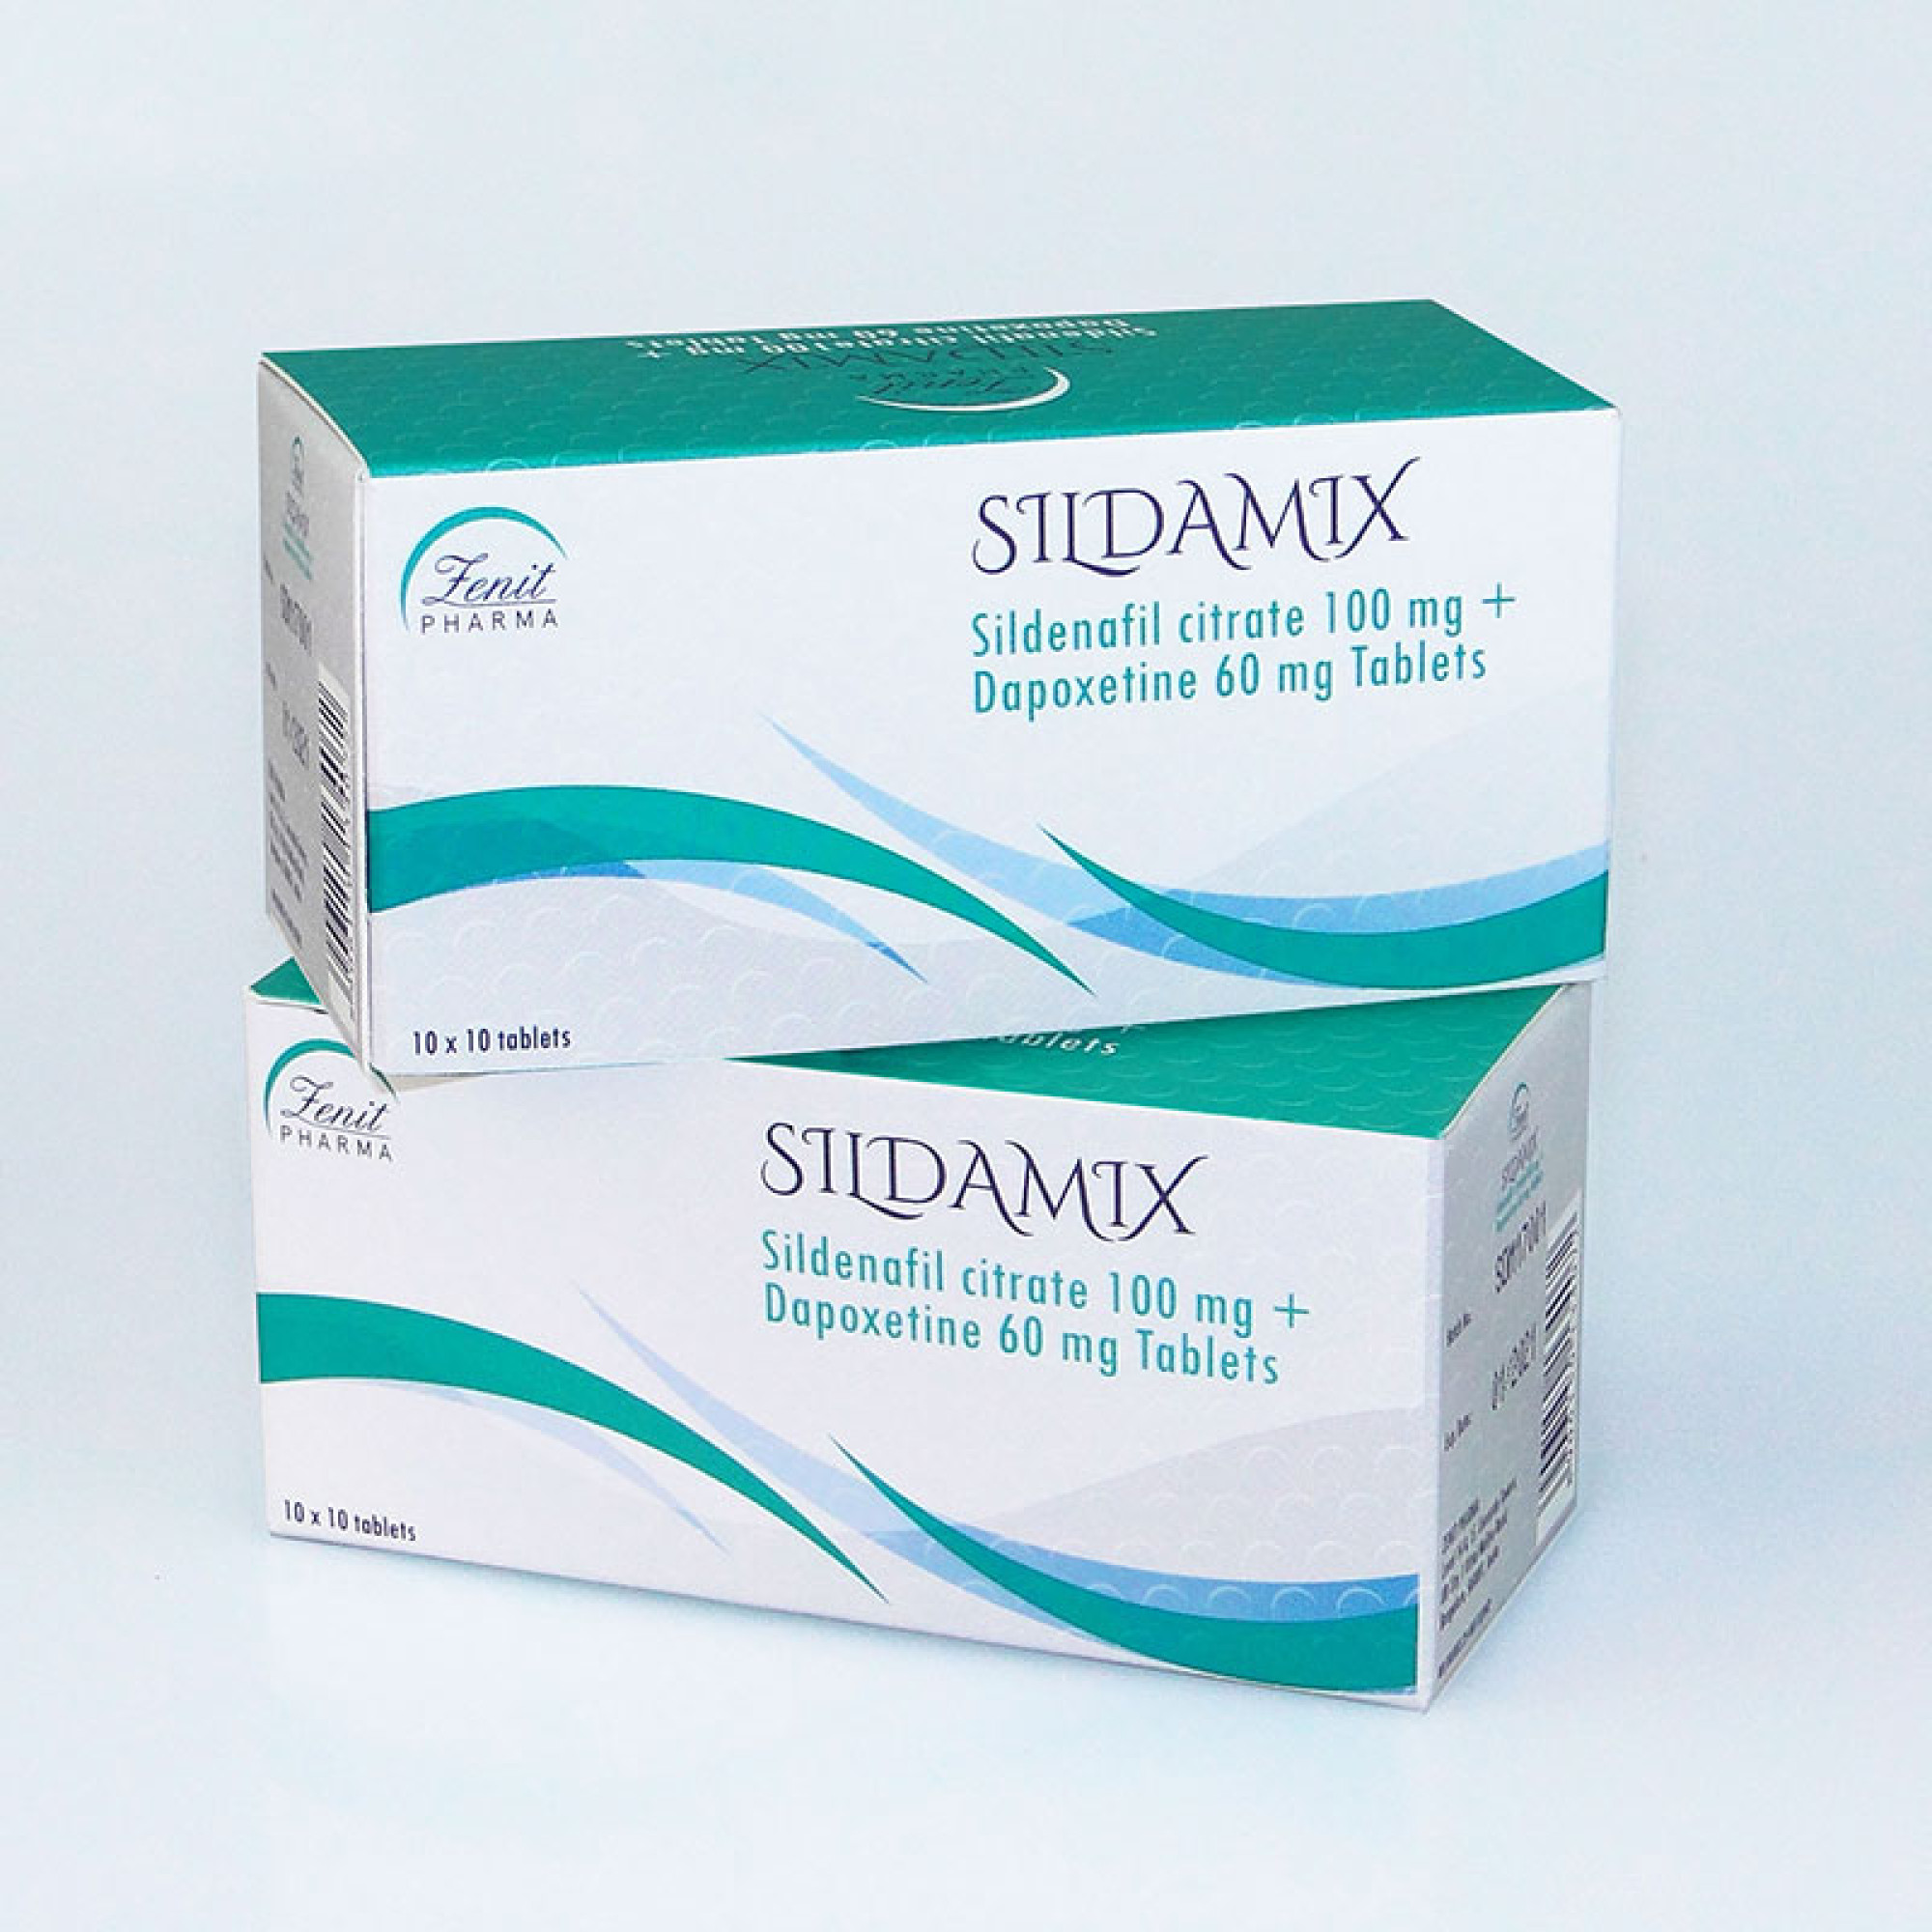 Sildamix 160 mg -1